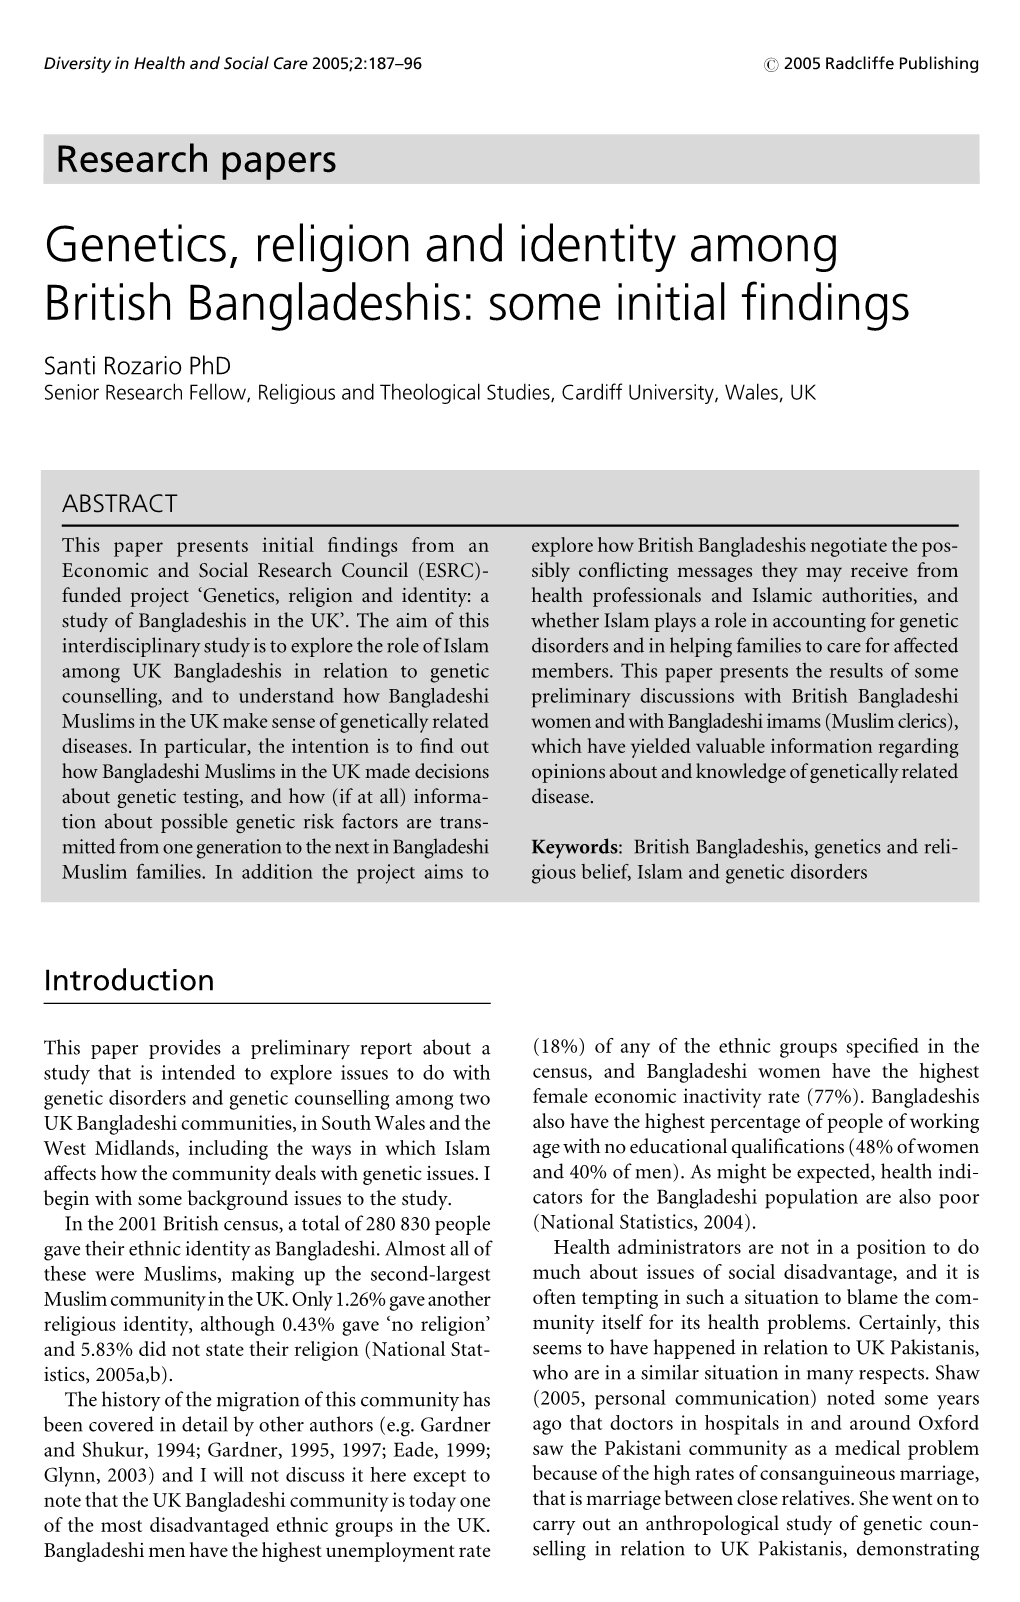 Genetics, Religion and Identity Among British Bangladeshis: Some Initial